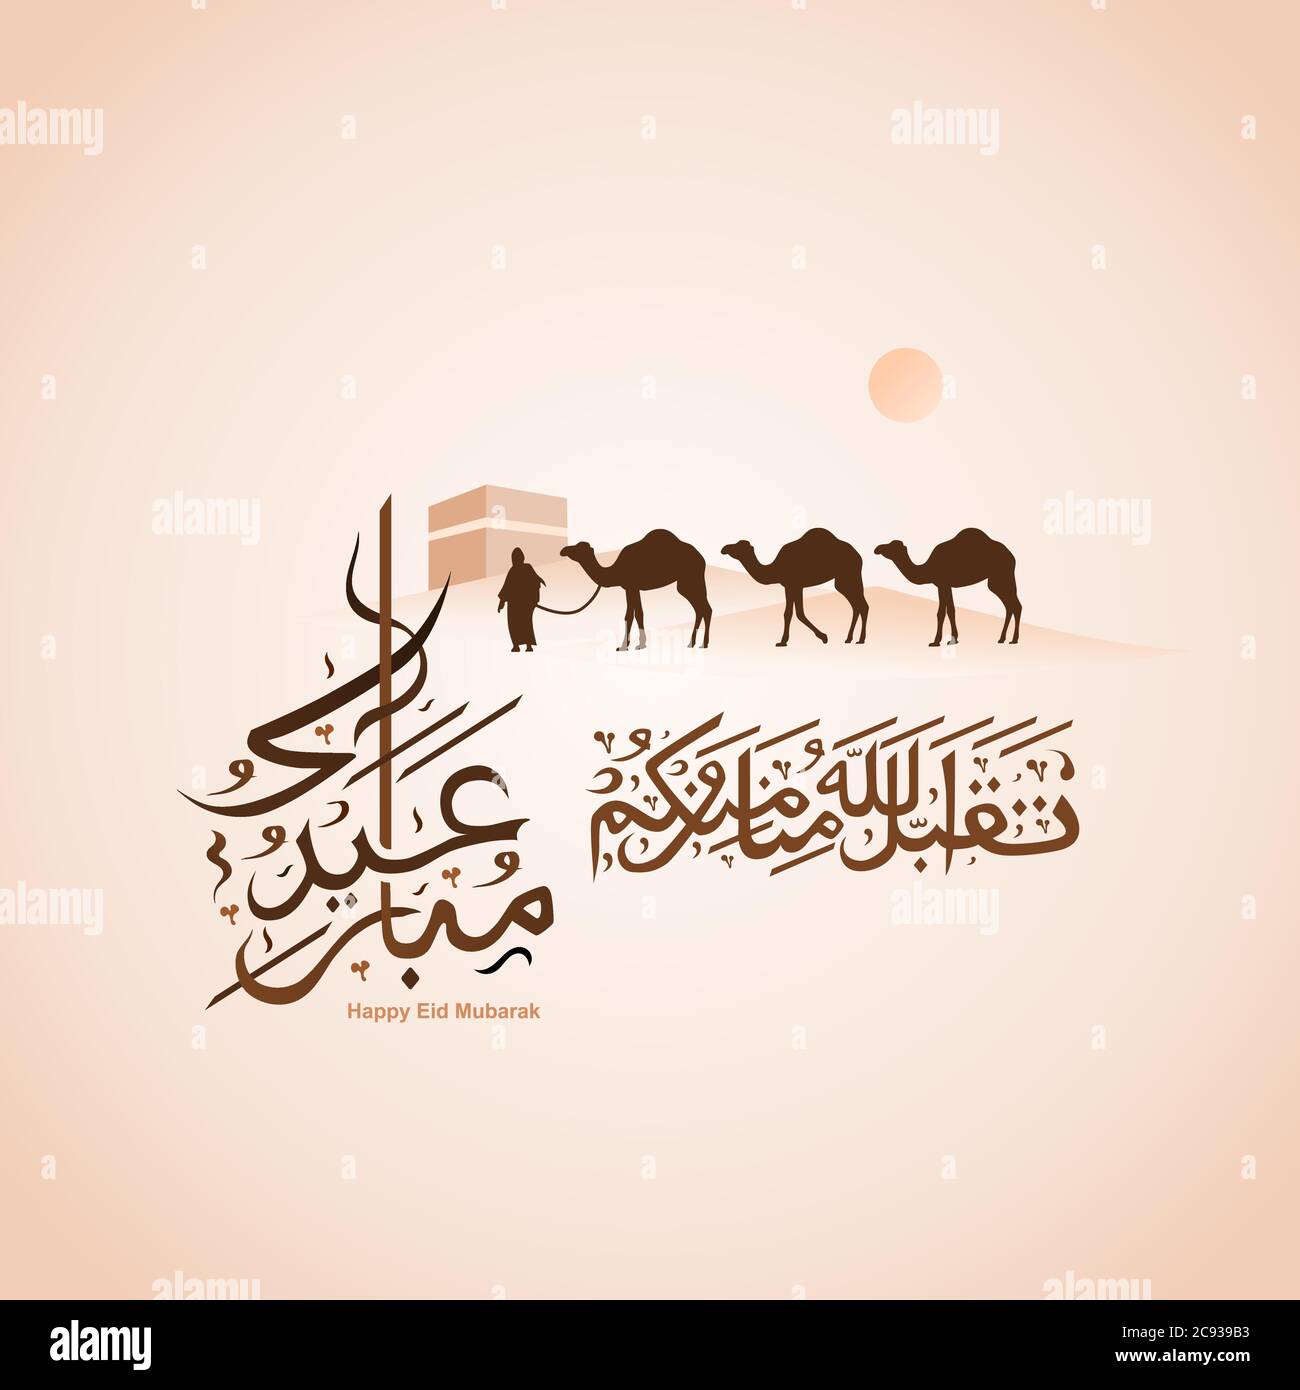 Eid Mubarak calligraphy illustration with camel vector - Aidul Design 189 Stock Vector